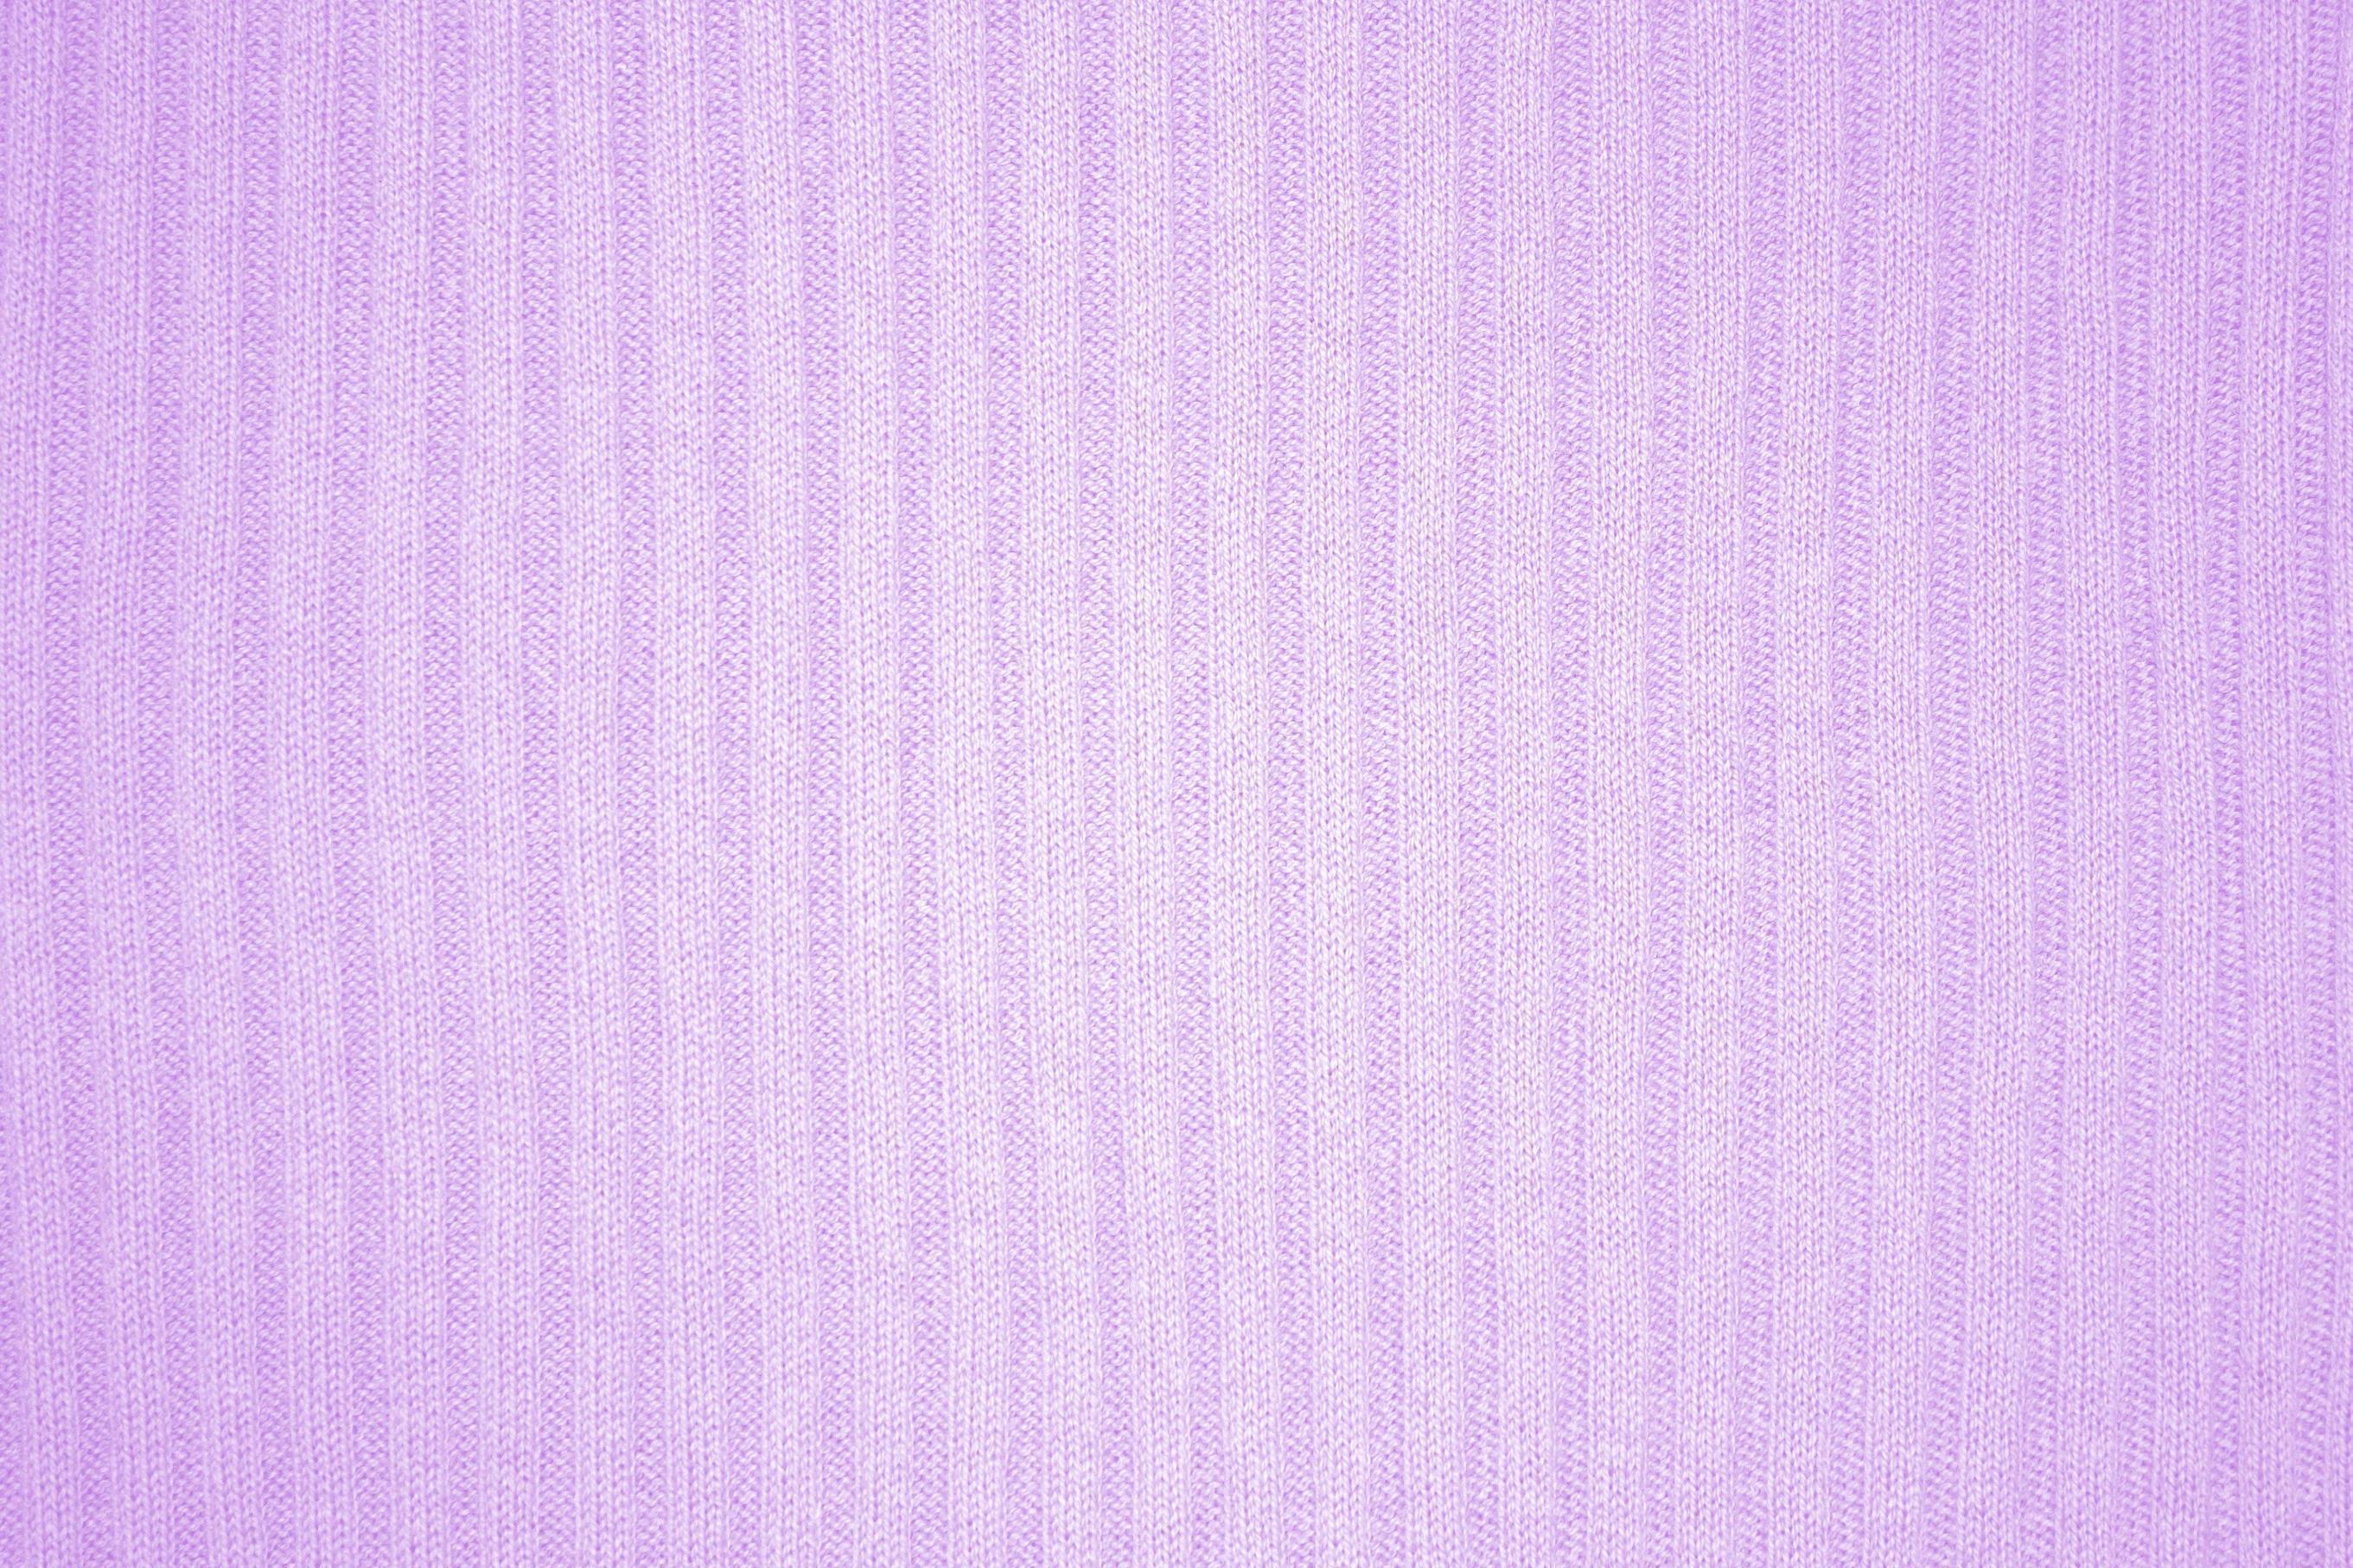 Light Purple 64 216310 Image HD Wallpaper. Wallfoy.com